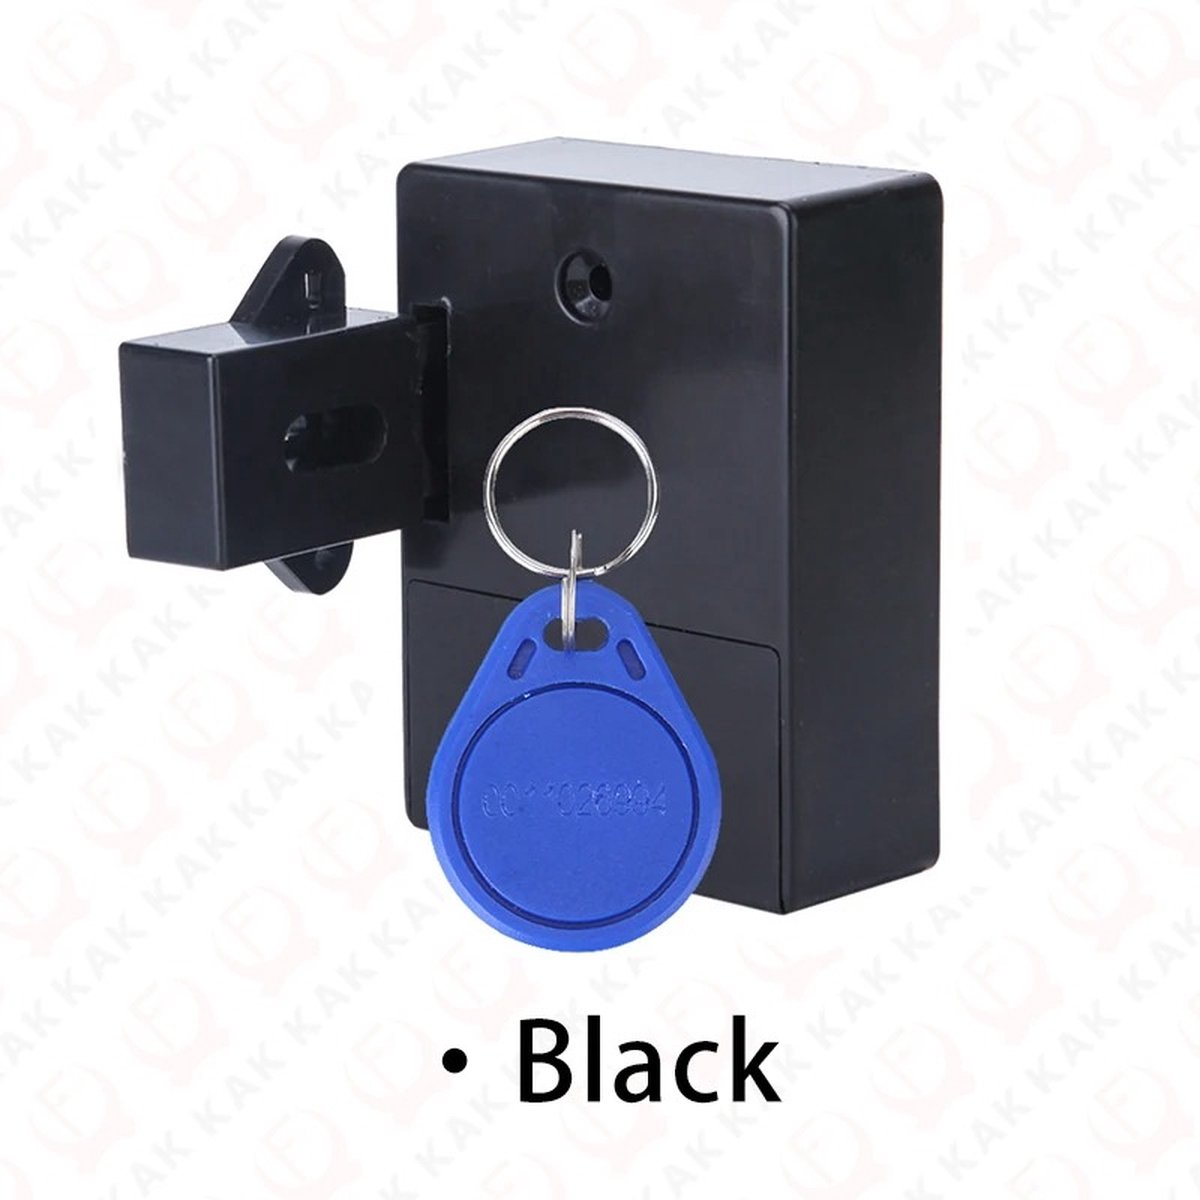 ShopbijStef - Sensor Lock - Verborgen slot - Verborgen Sensor Lock - Elektronische Onzichtbare Verborgen Kast Lock Hardware - Zwart